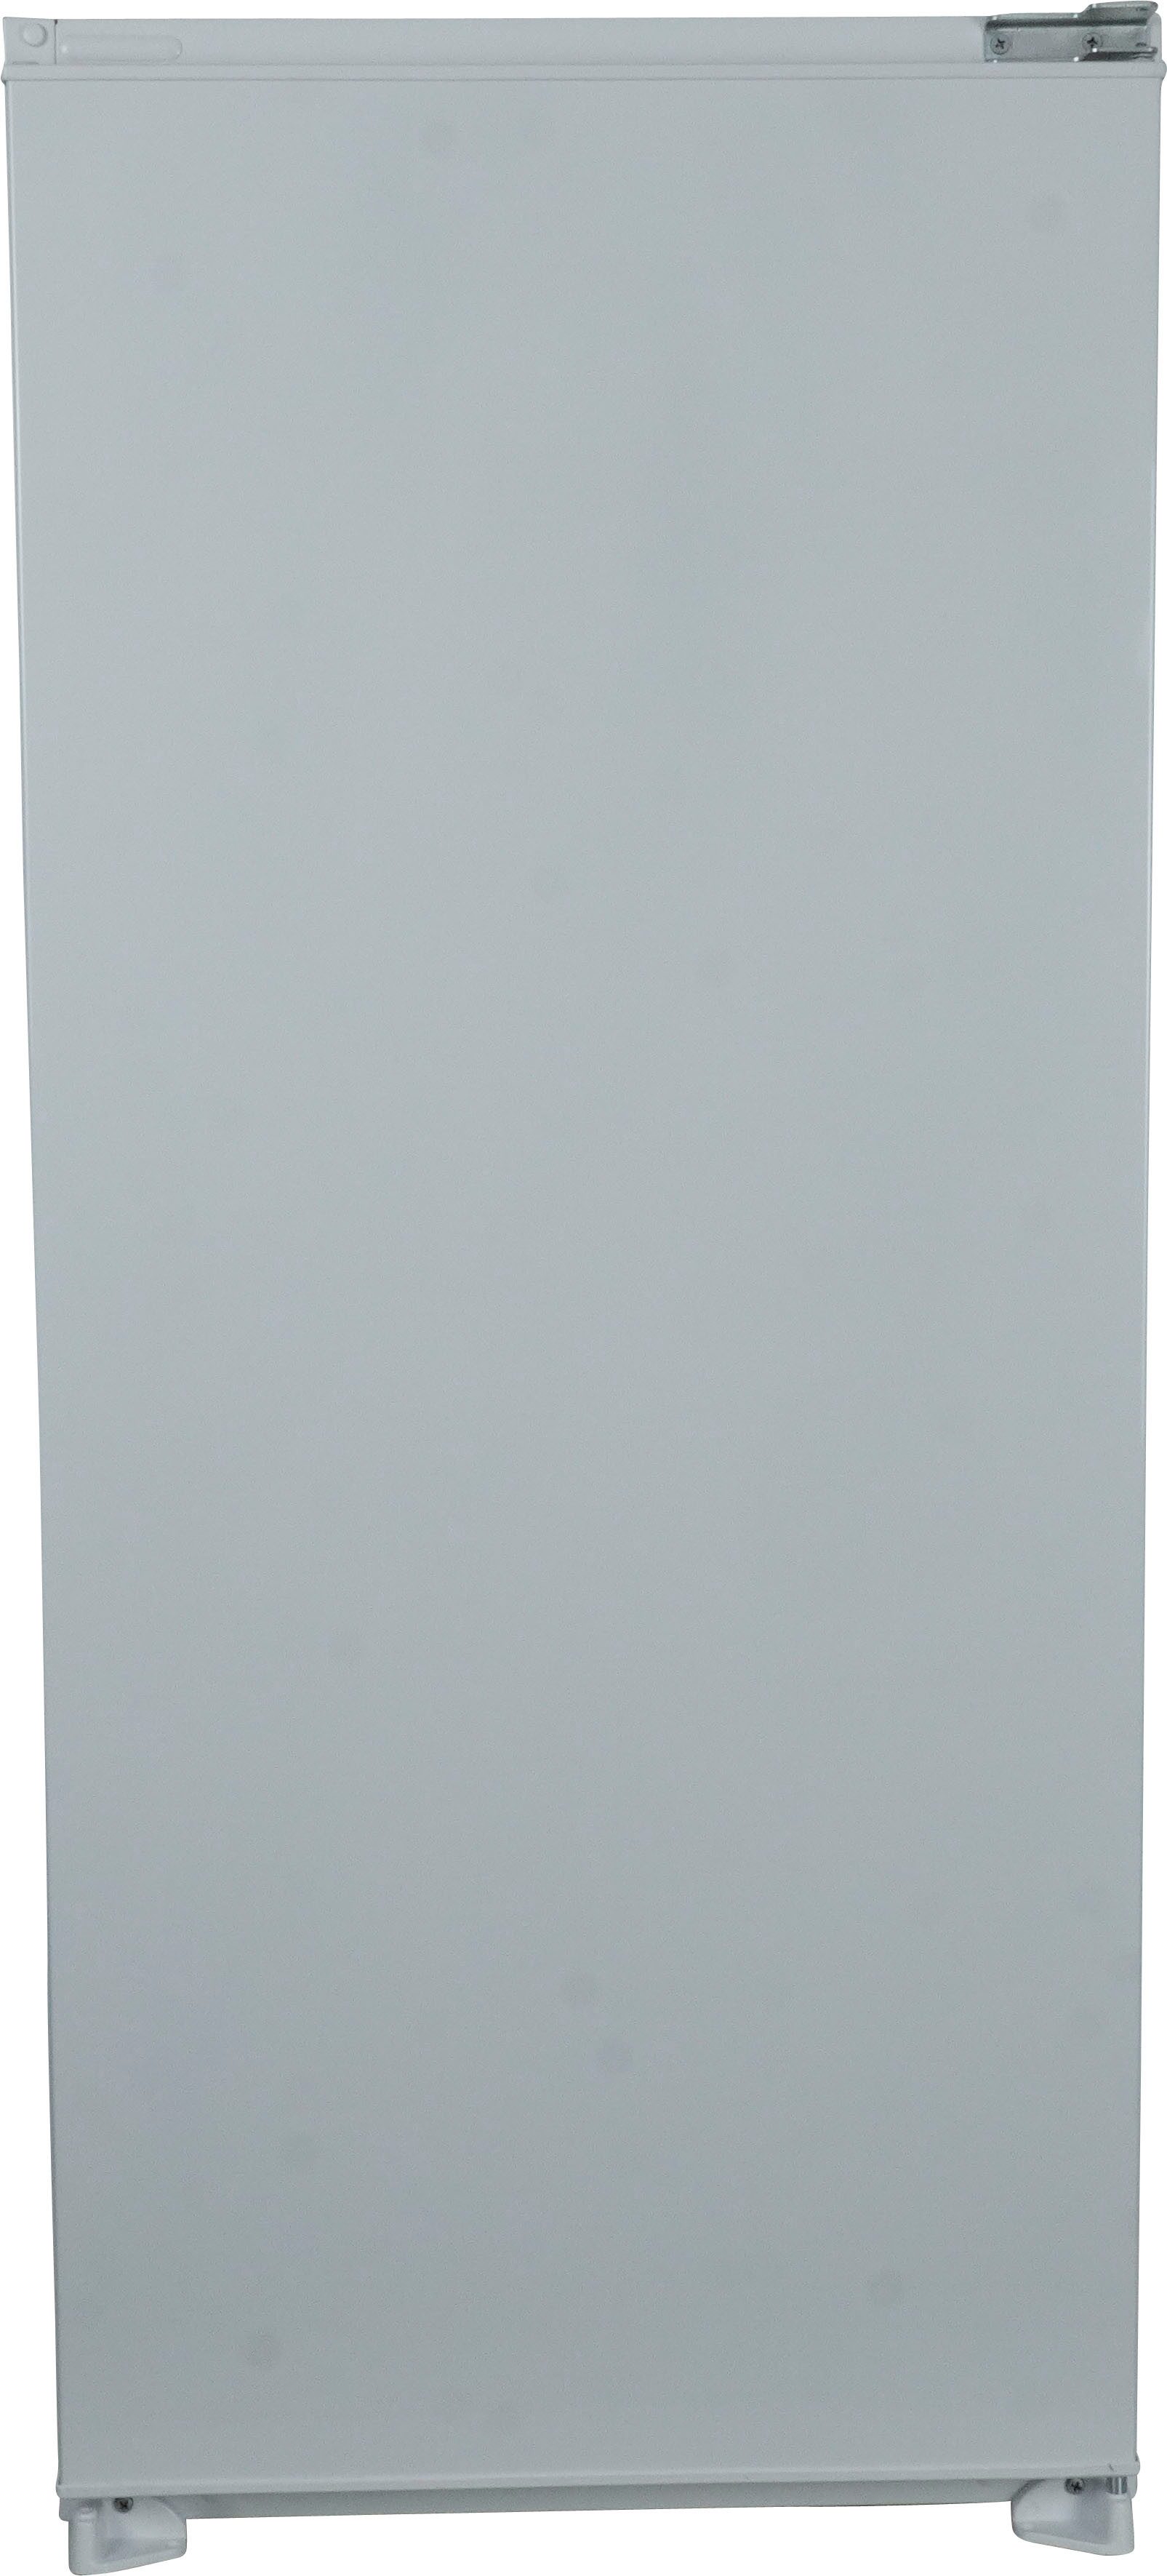 RESPEKTA Einbaukühlschrank KS1224, 122,5 cm hoch, 54,5 cm breit